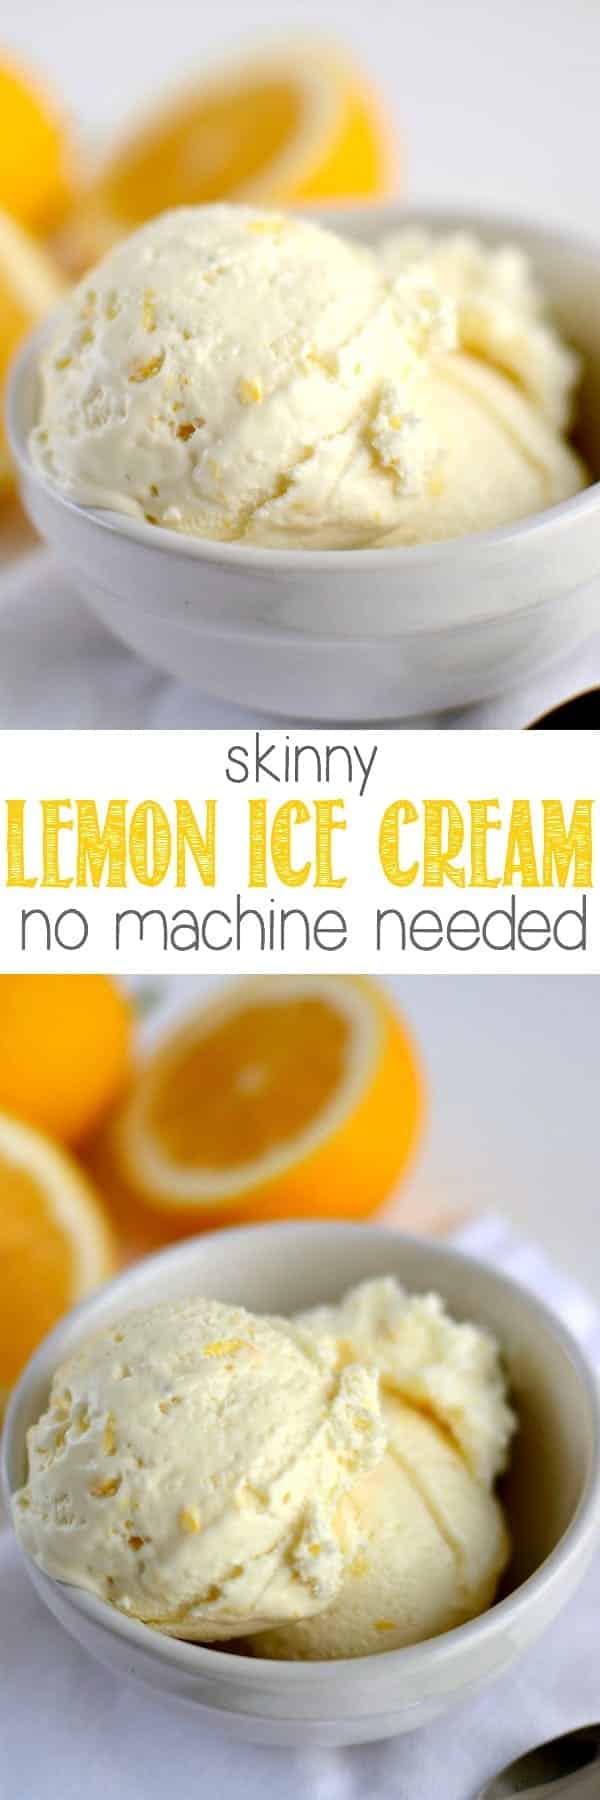 Skinny Lemon Ice Cream